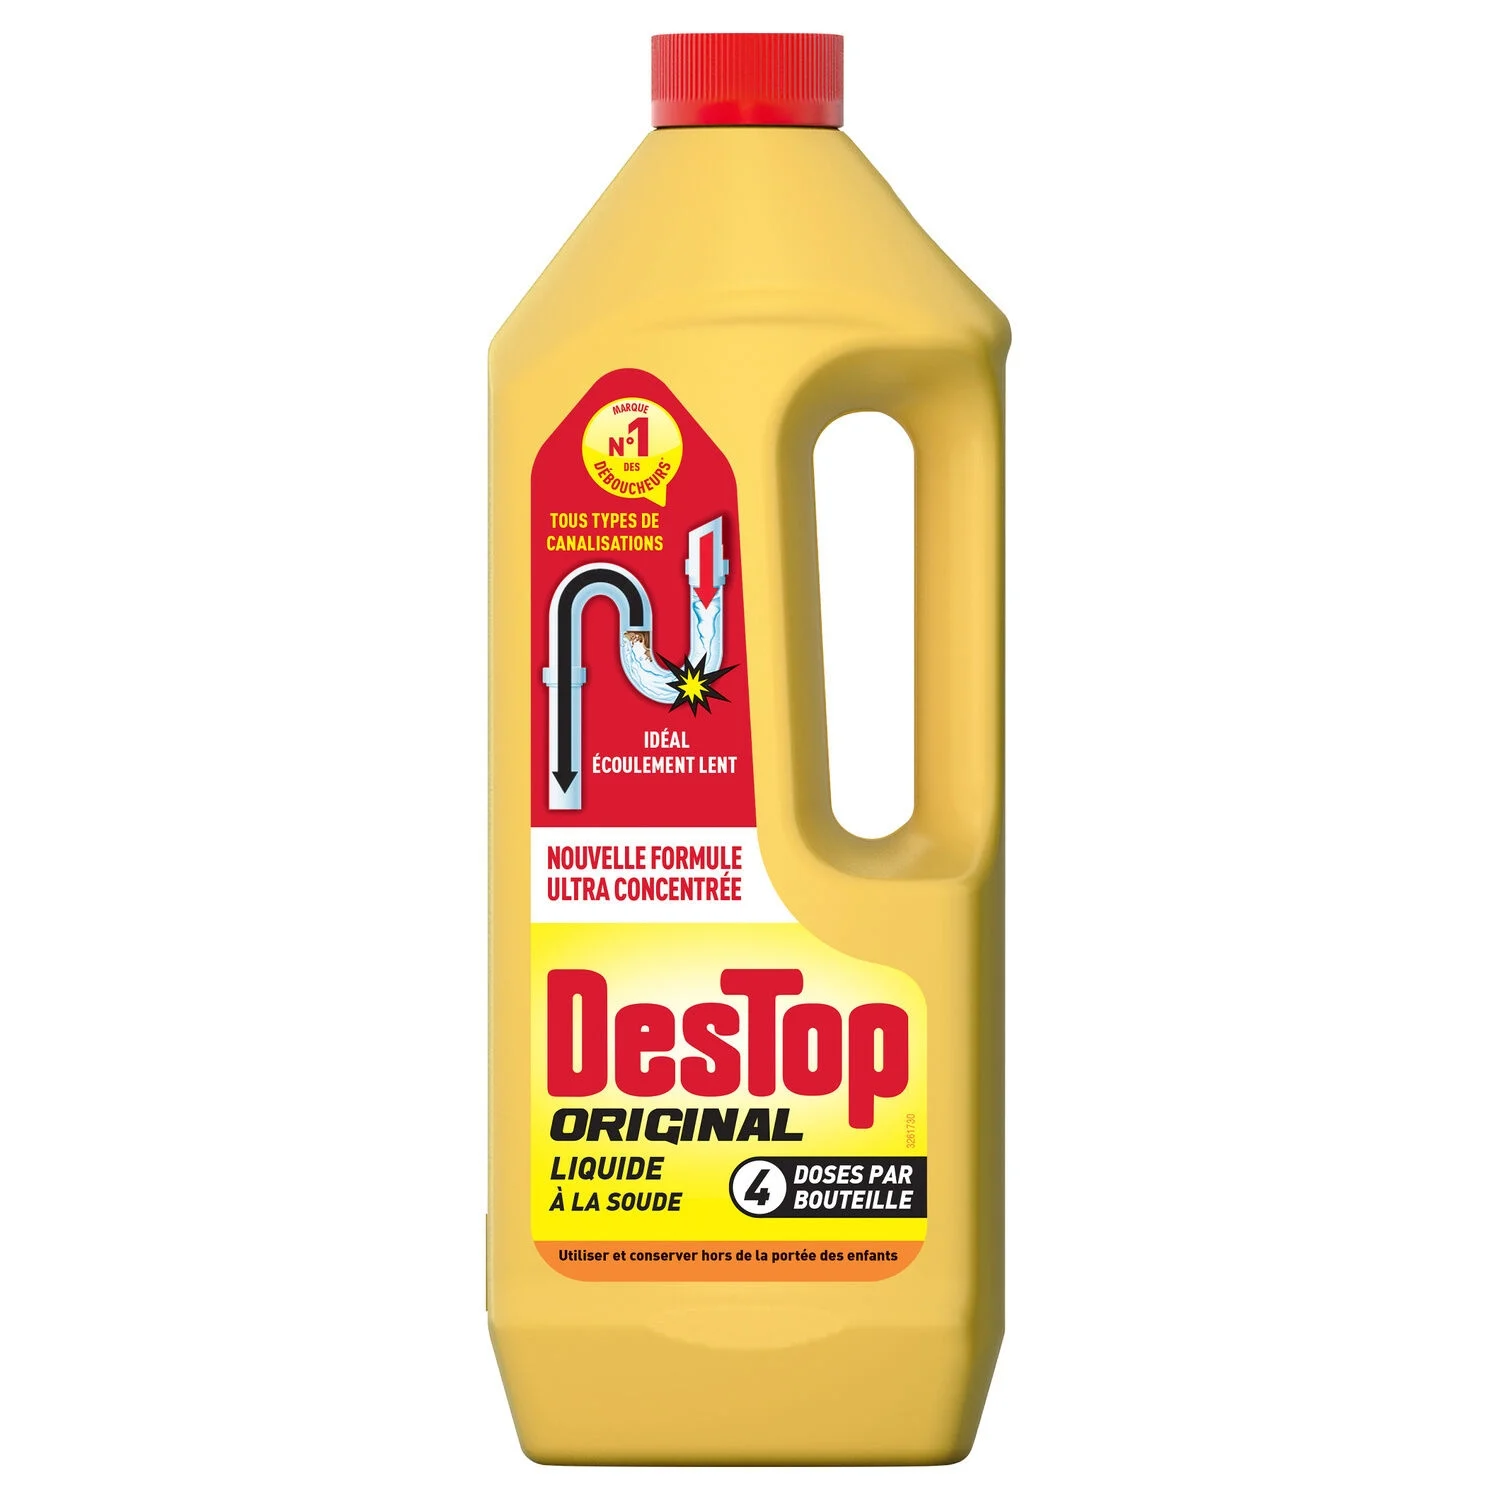 Destop Liquide 4 Doses 950ml